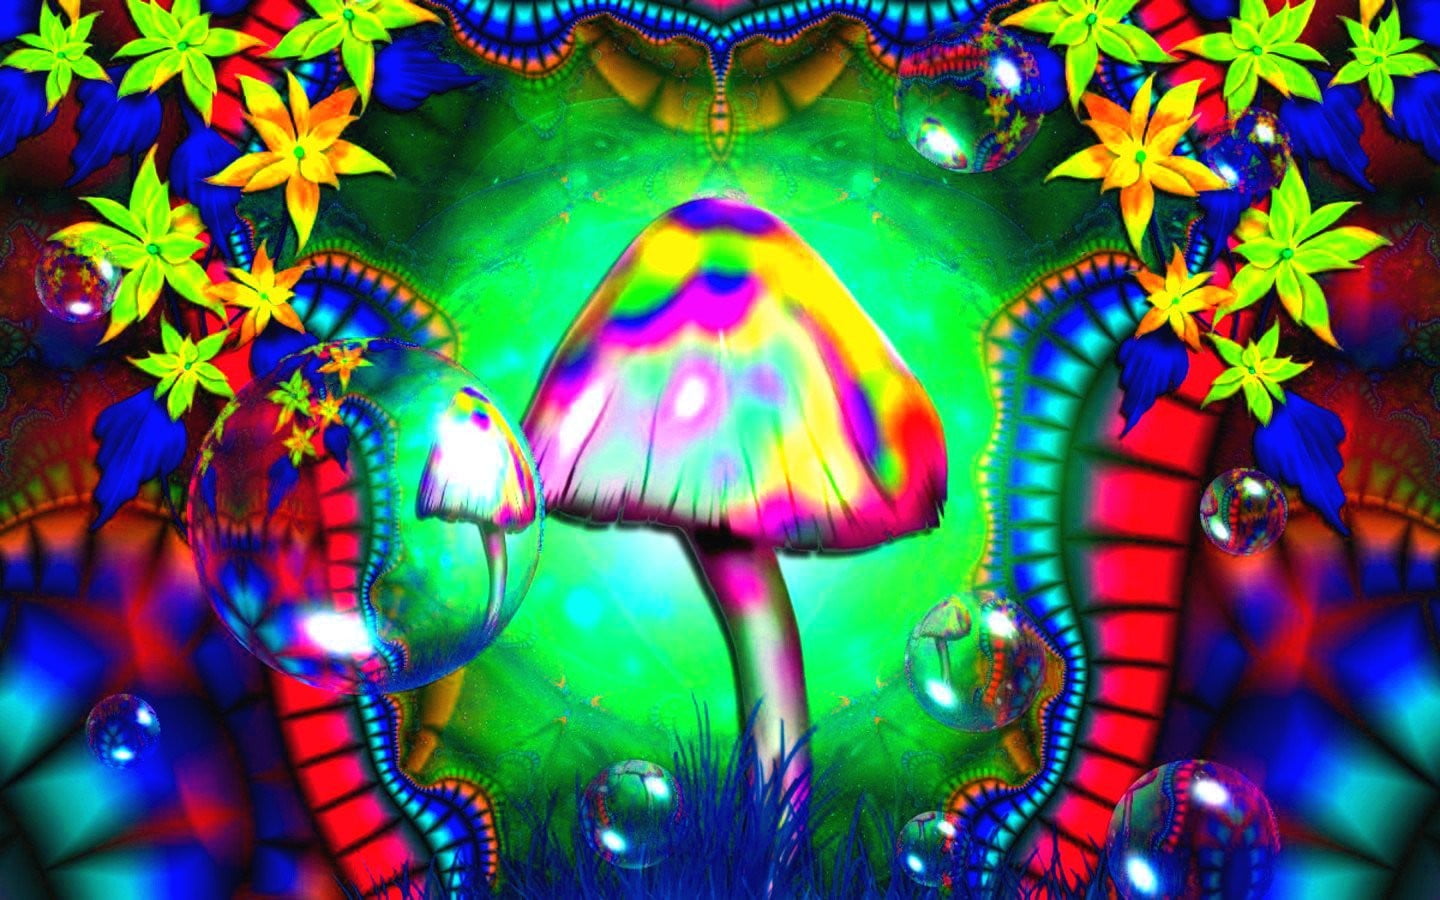 multicolored mushroom illustration, mushroom, colorful, psychedelic, LSD